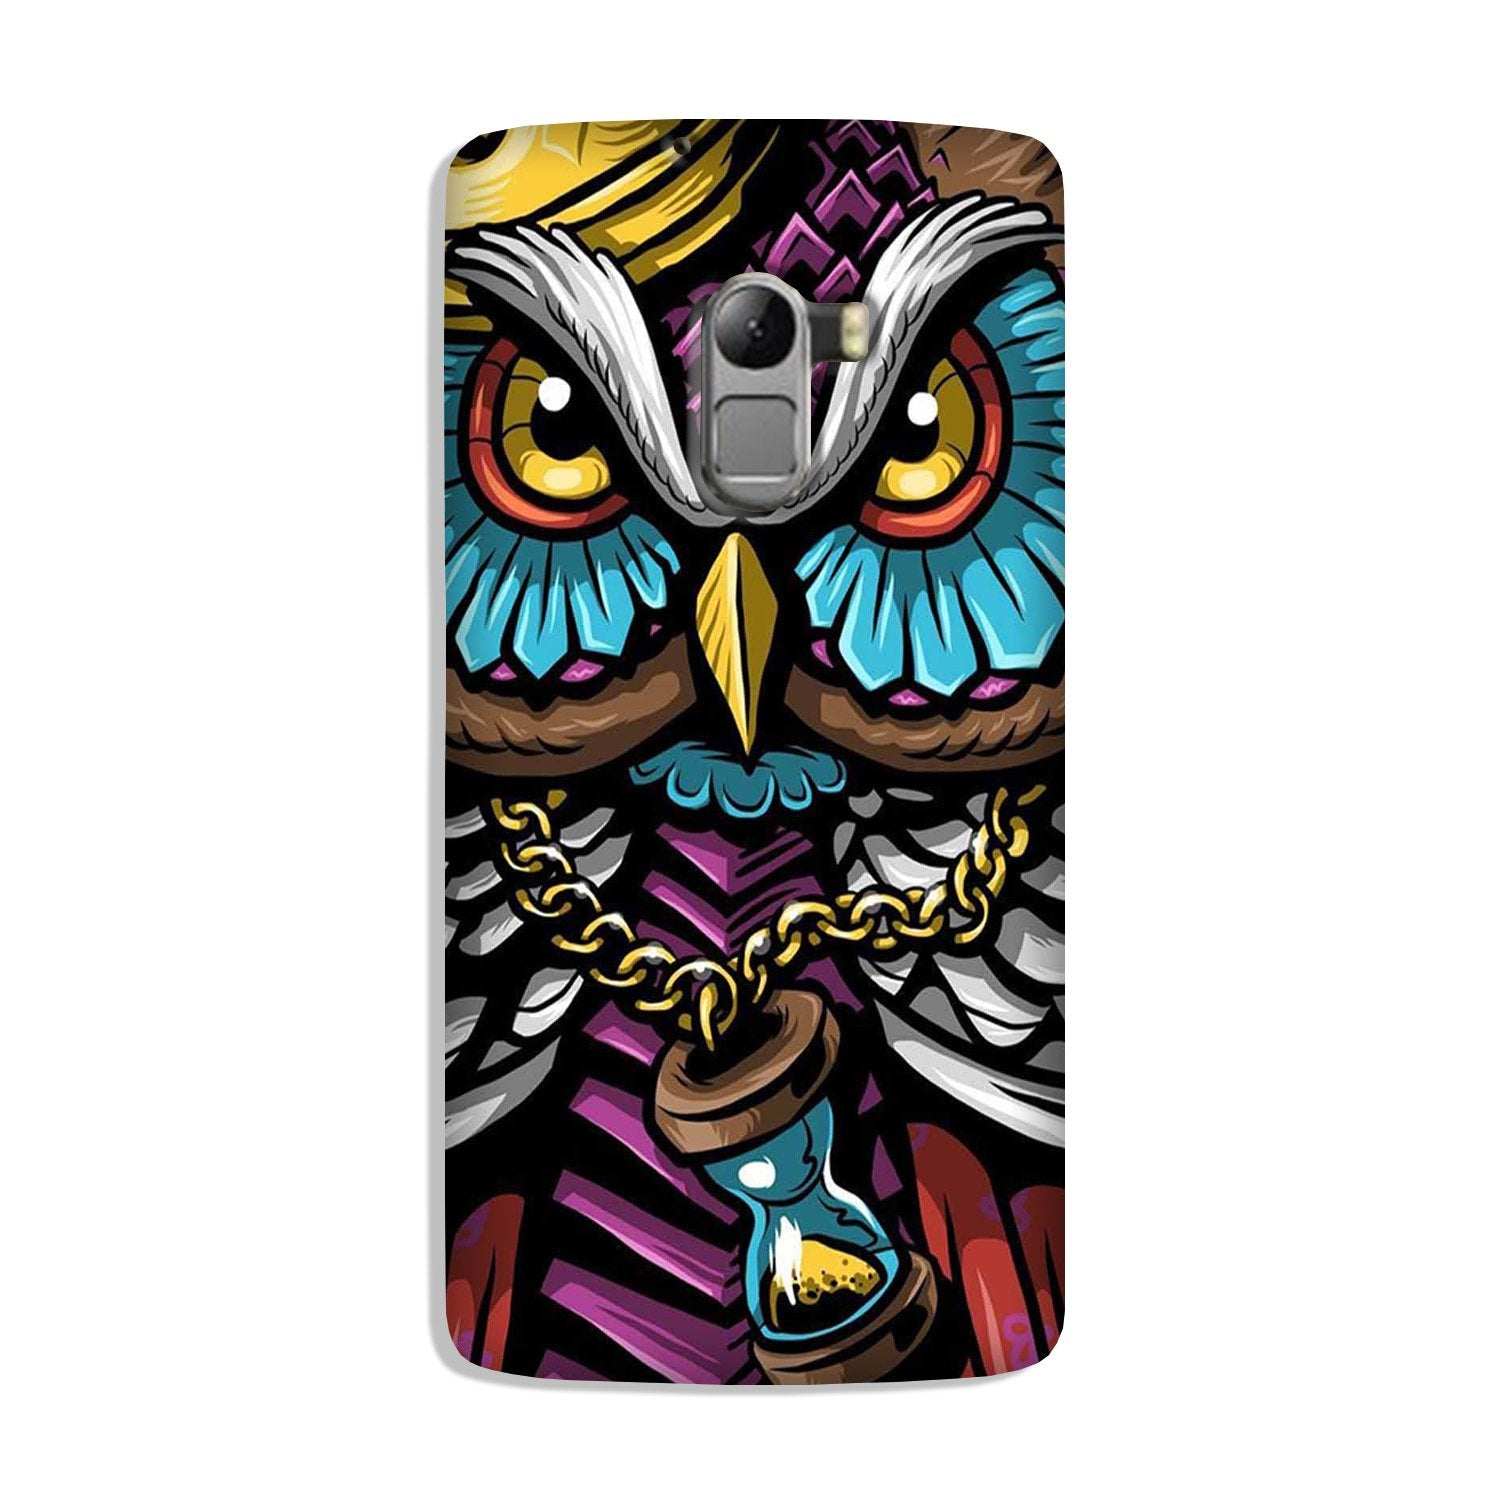 Owl Mobile Back Case for Lenovo K4 Note (Design - 359)